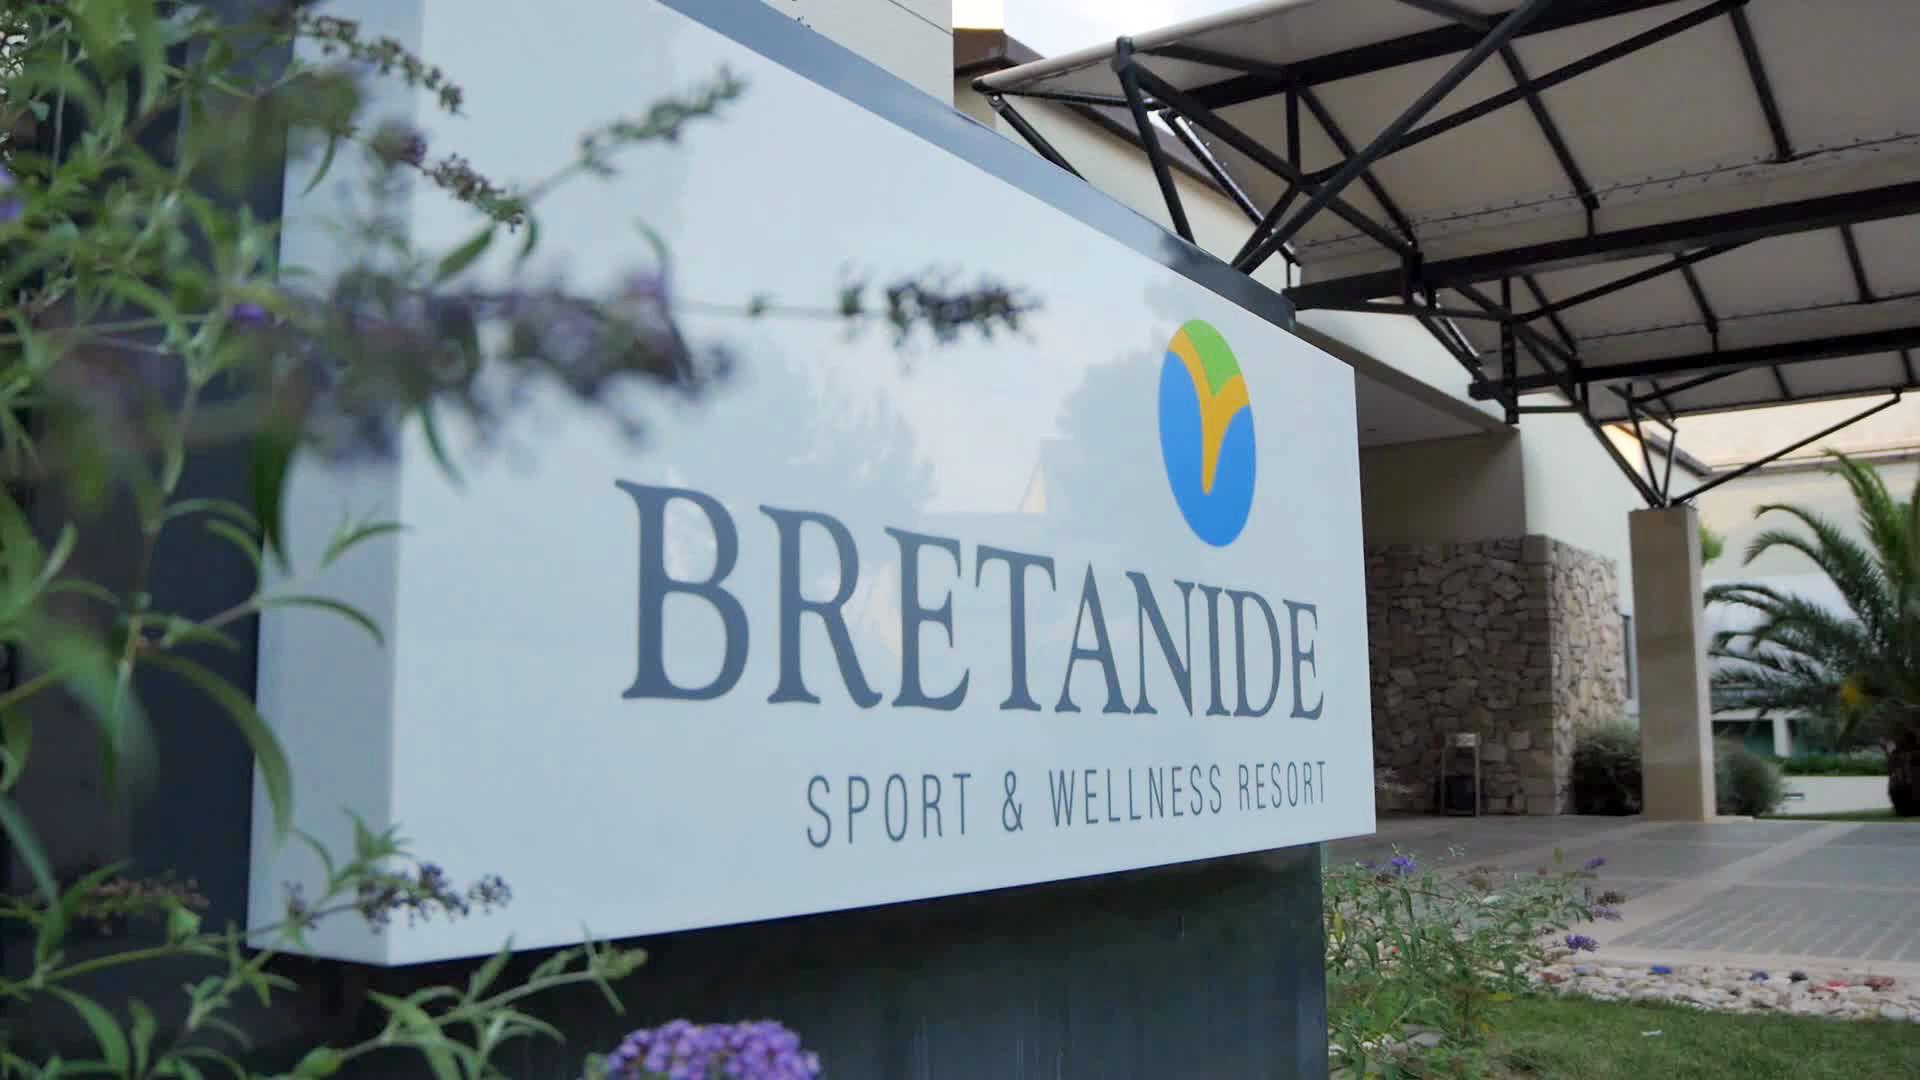 BRETANIDE Sport & Wellness Resort